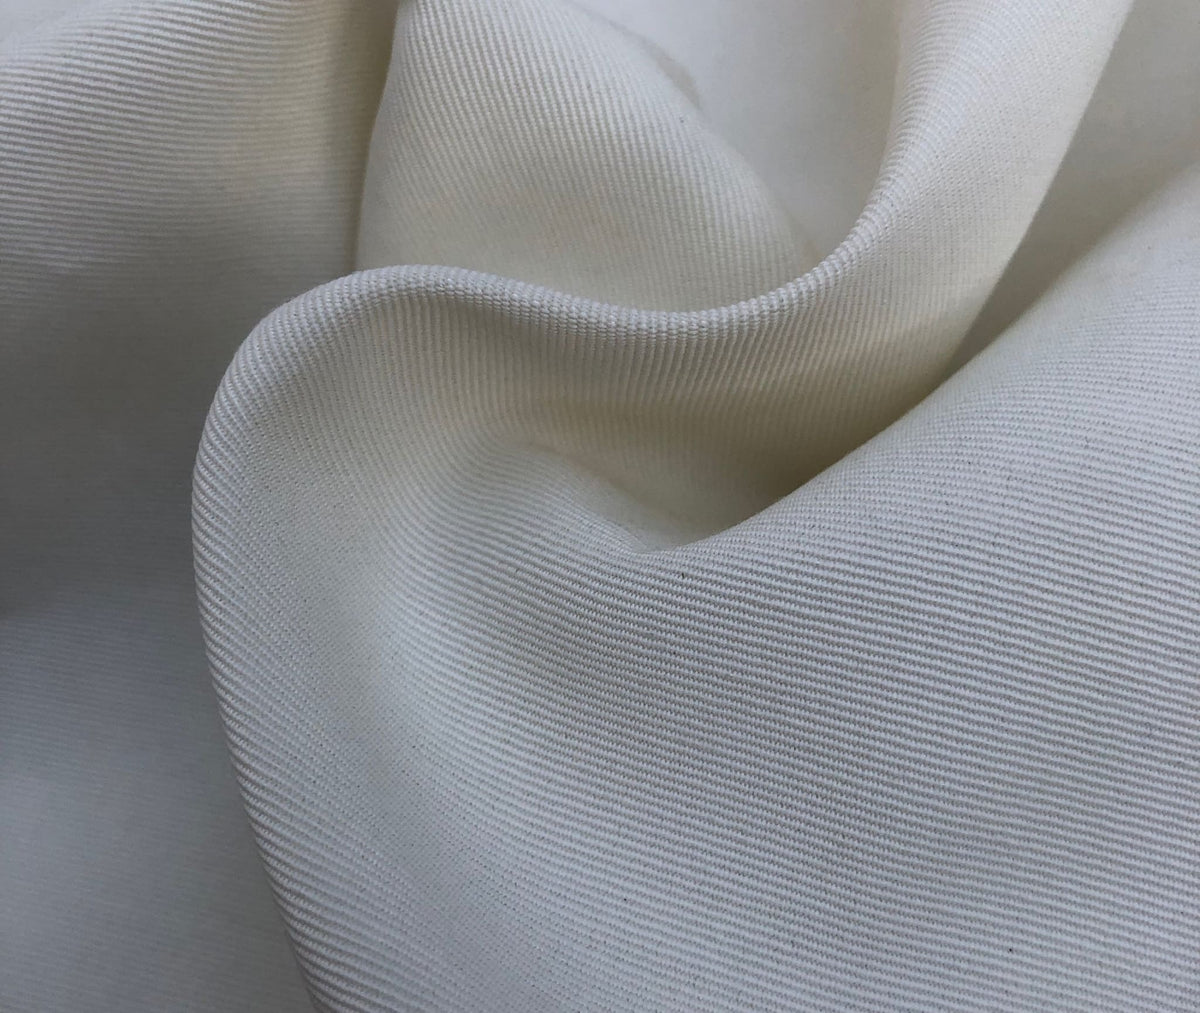 EBP INC 58 Buckram By The Yard - White 100% Cotton Fabric